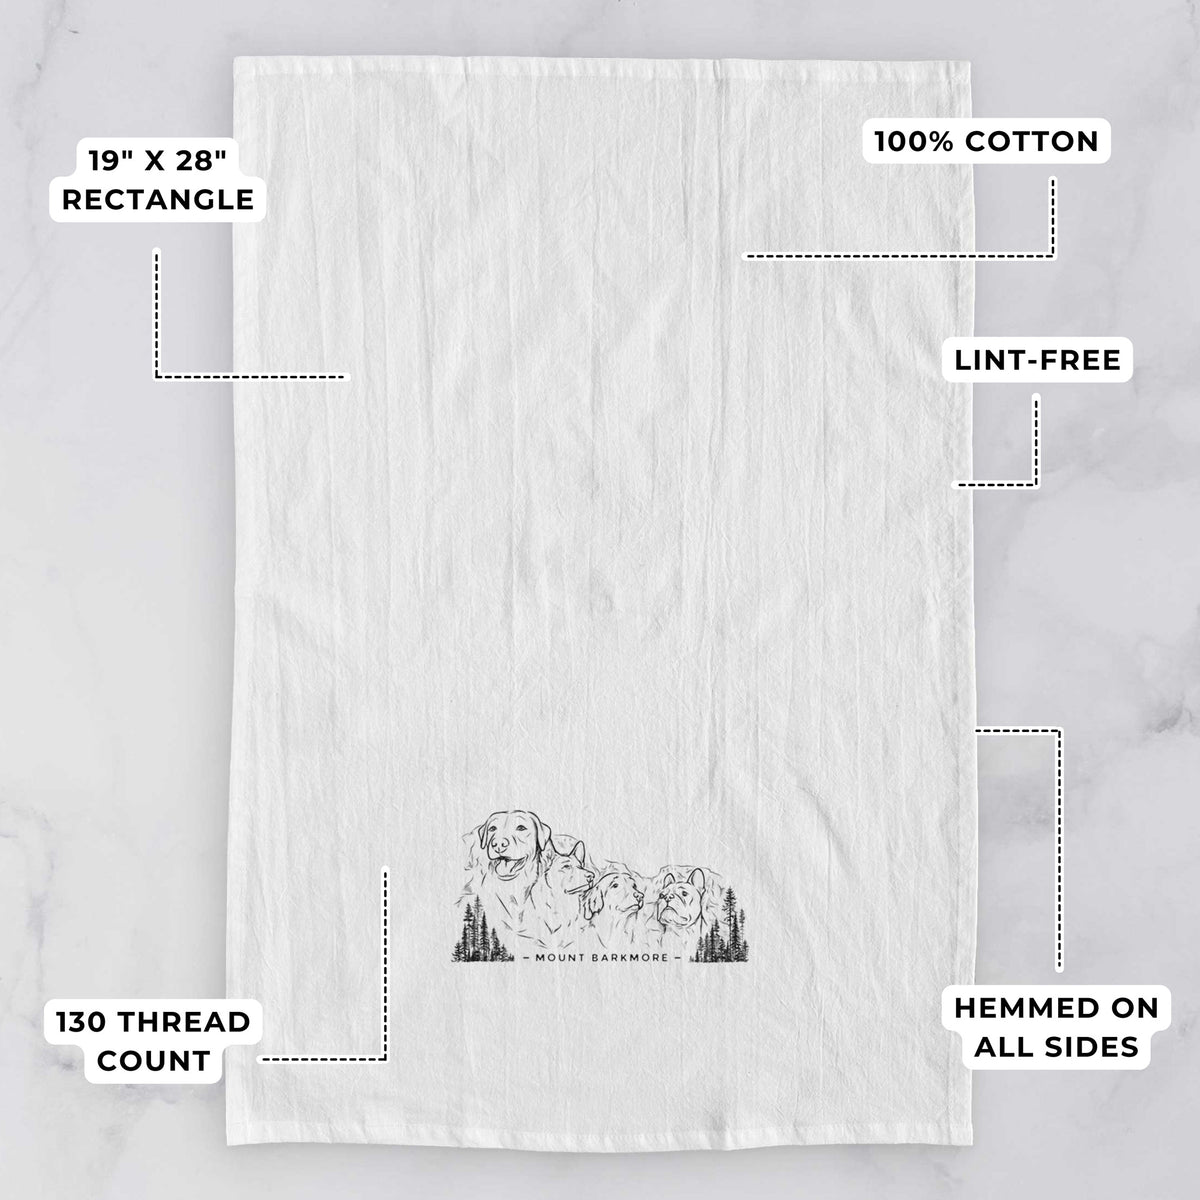 Mount Barkmore - Dog Tribute Tea Towel